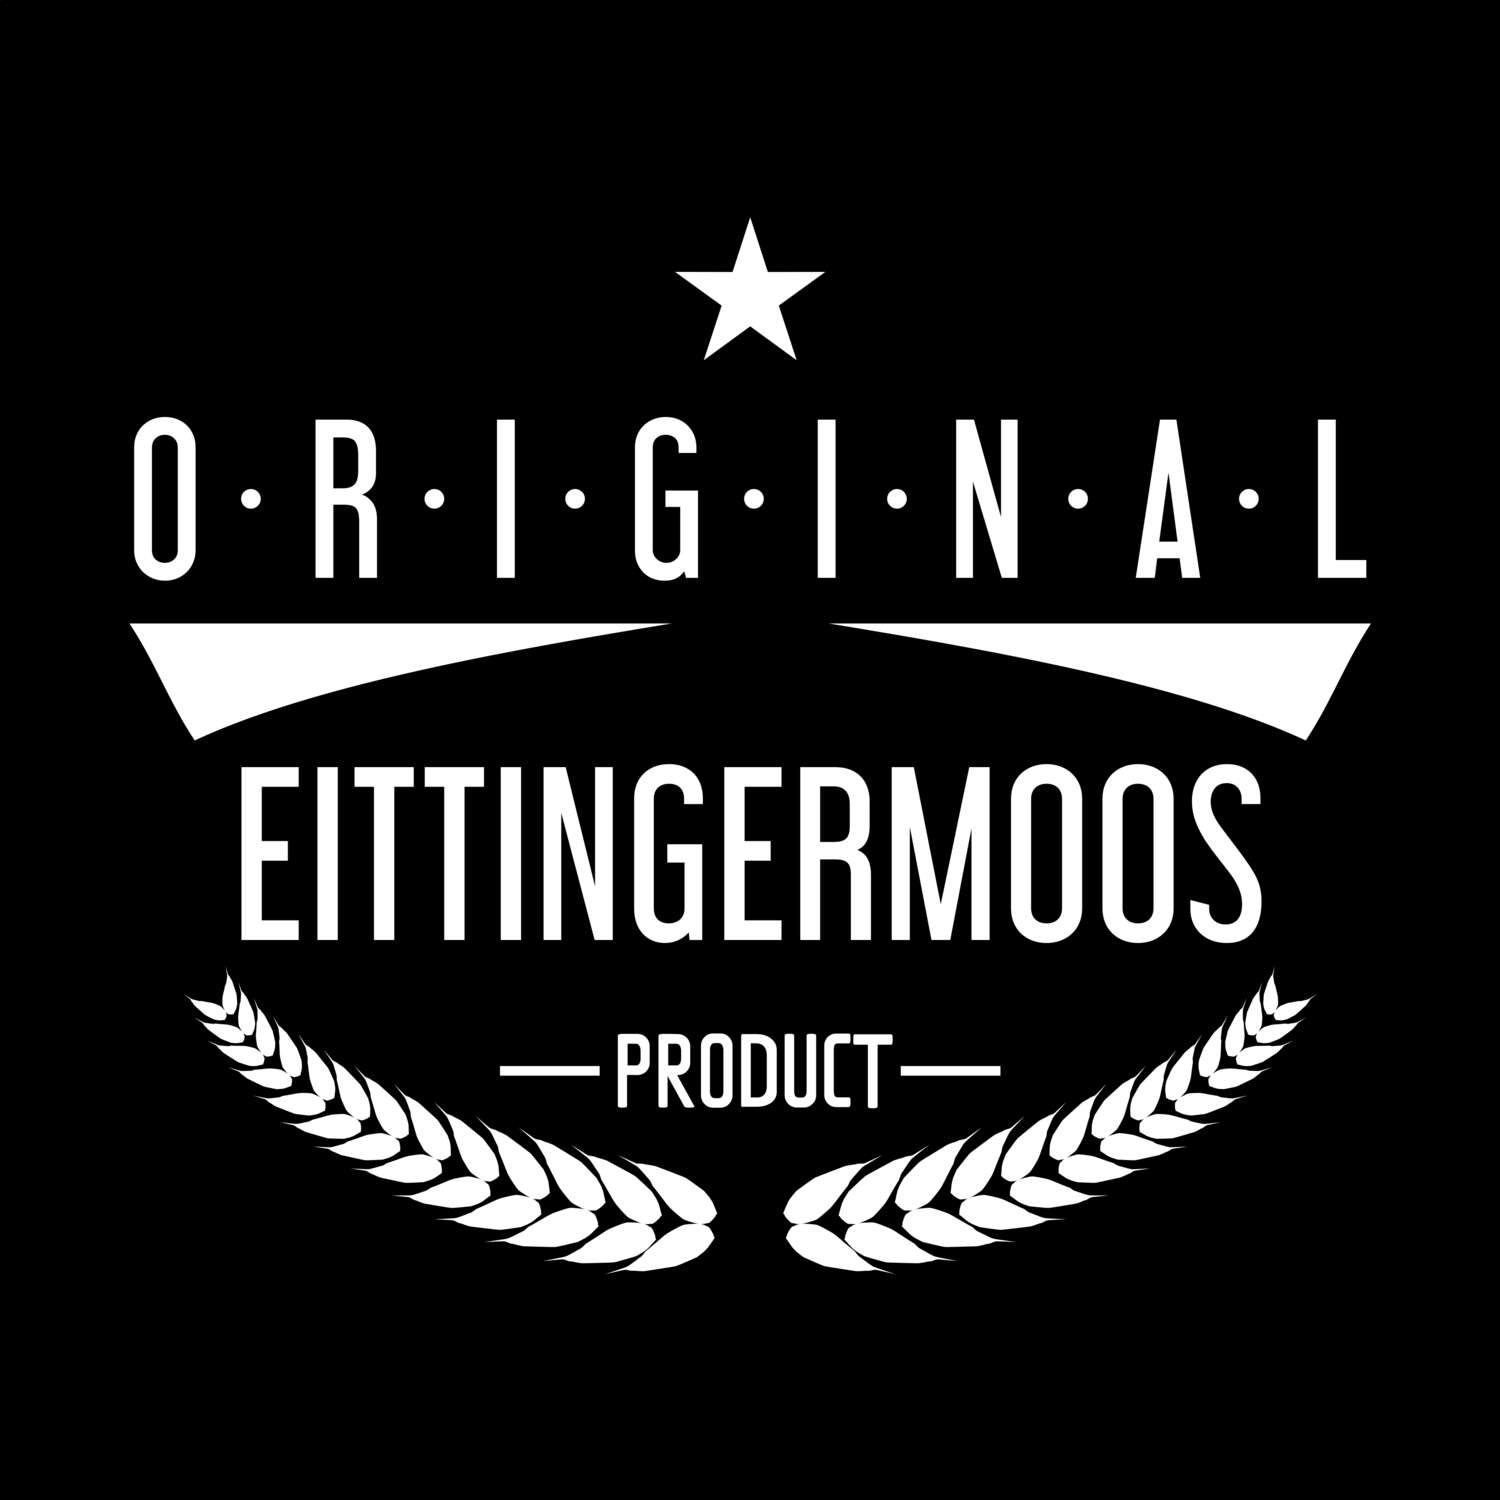 Eittingermoos T-Shirt »Original Product«